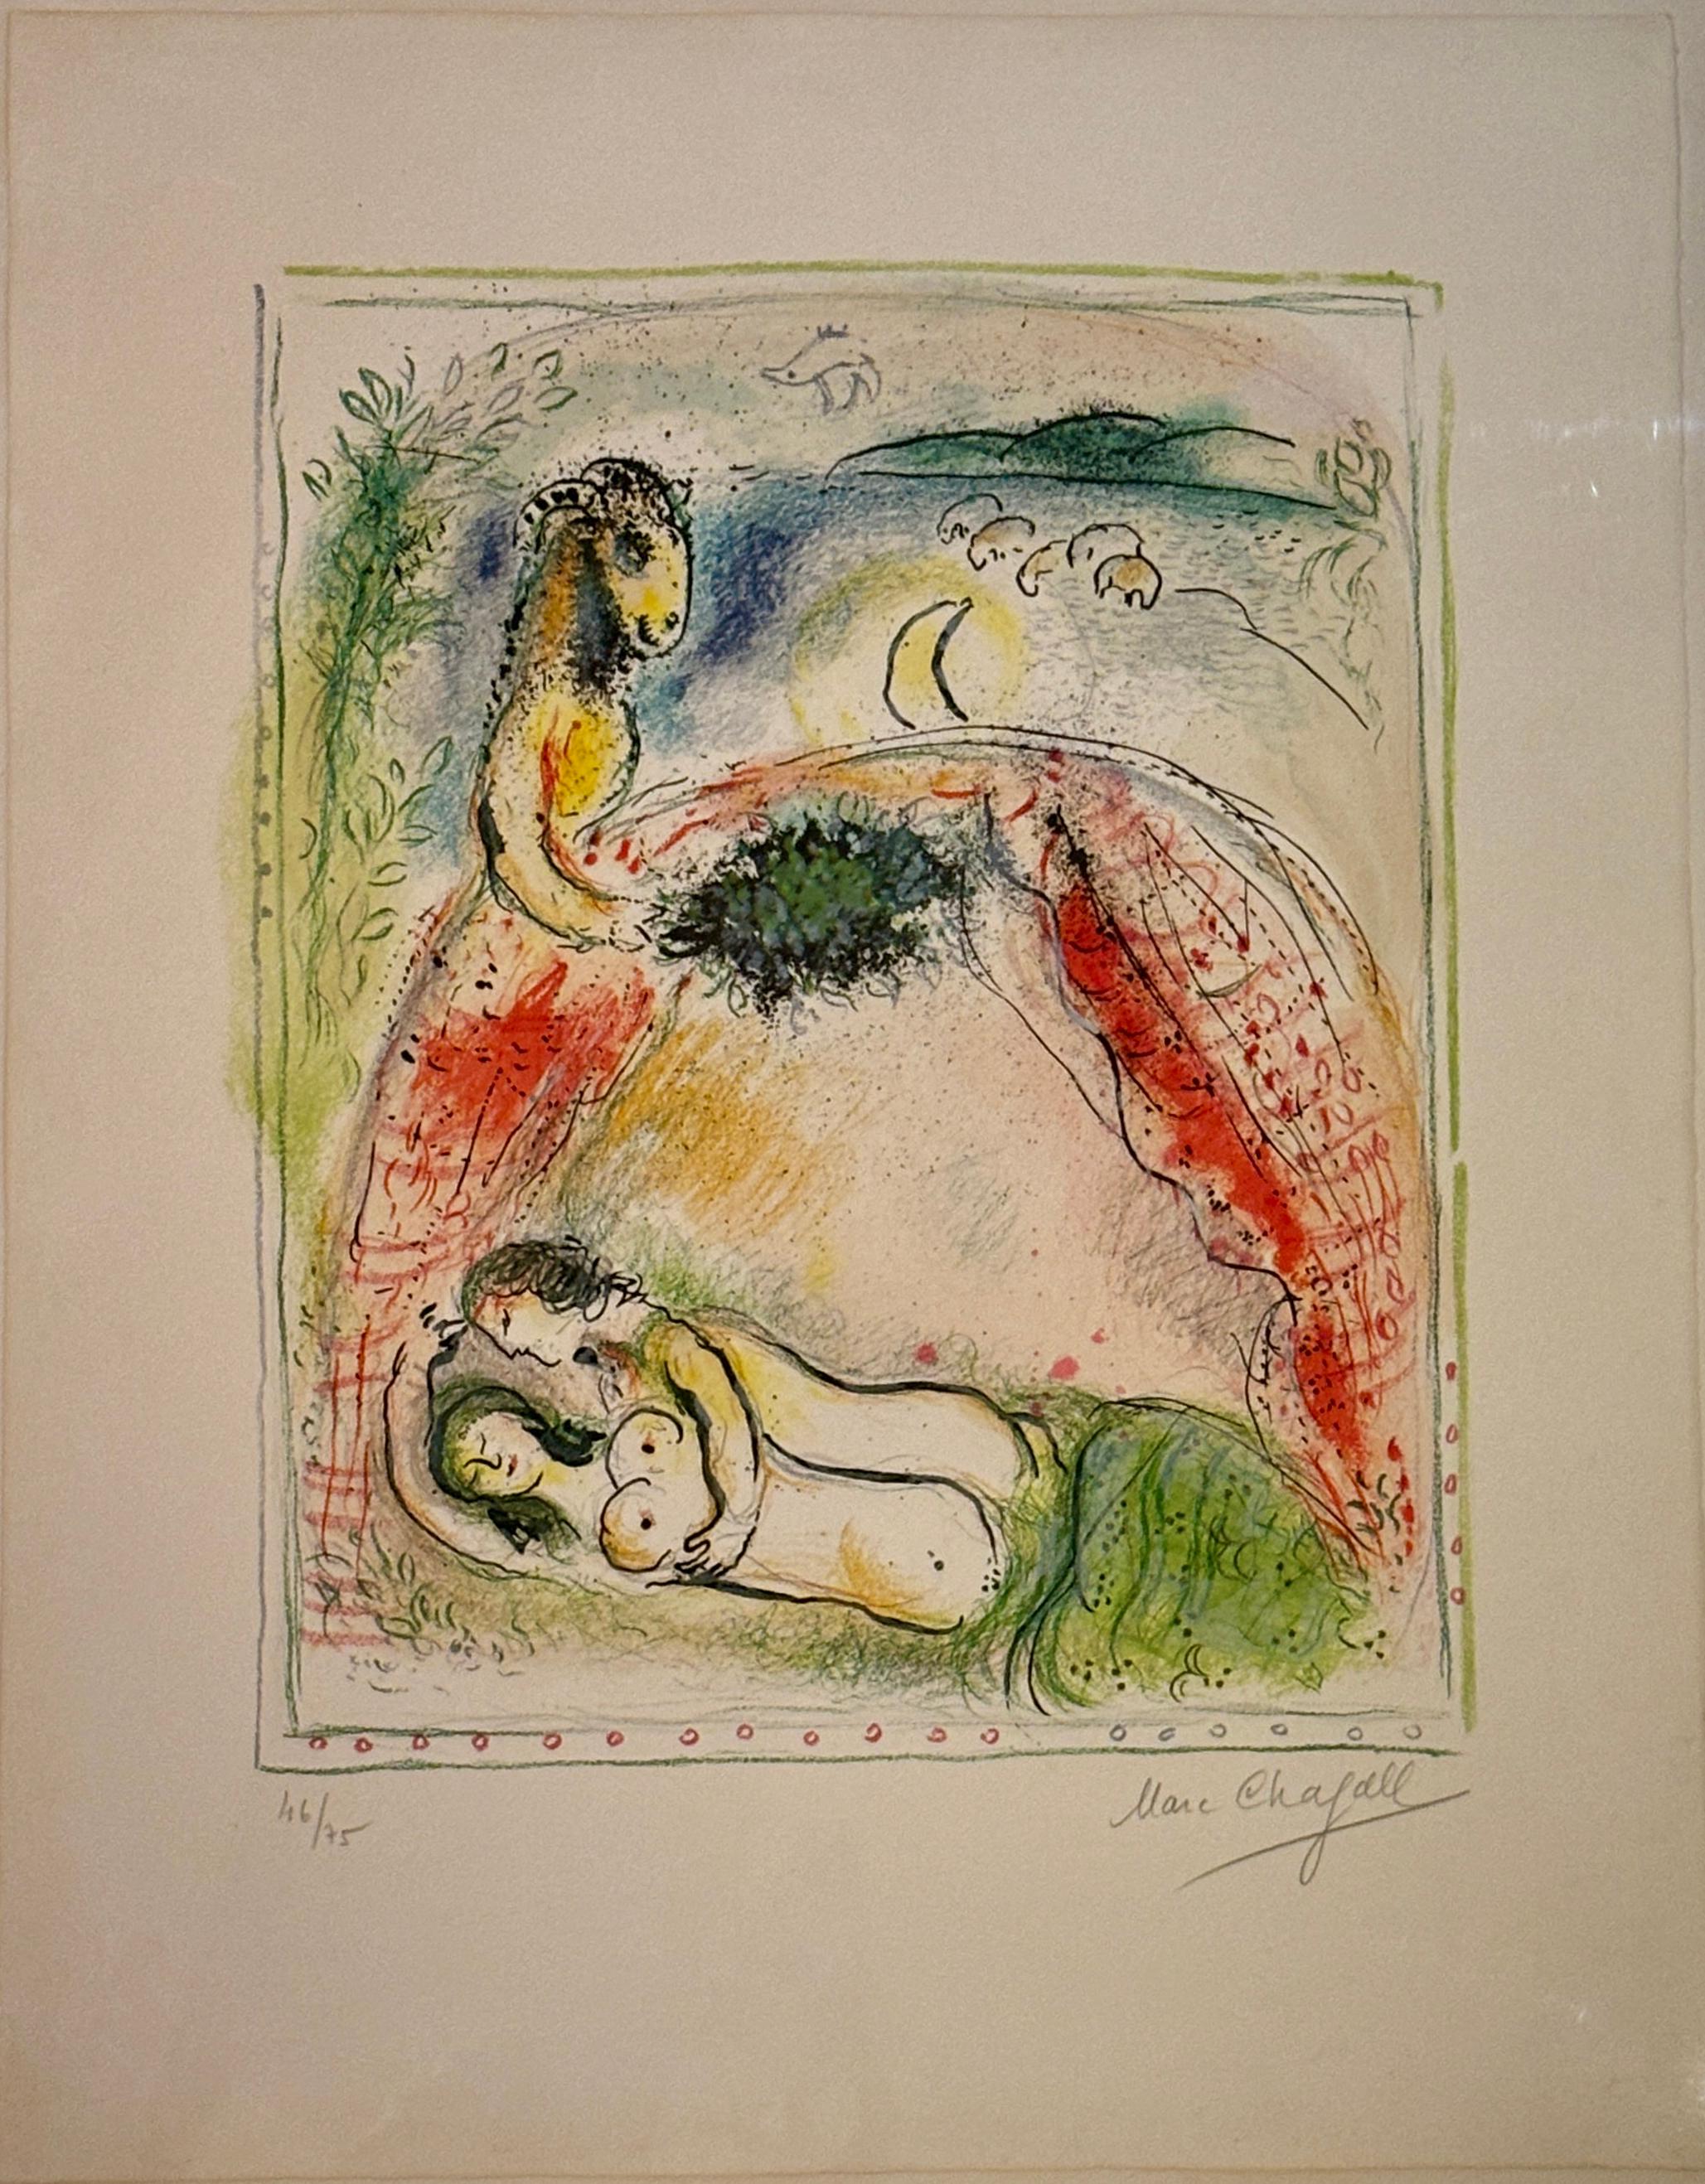 Where was Marc Chagall born?